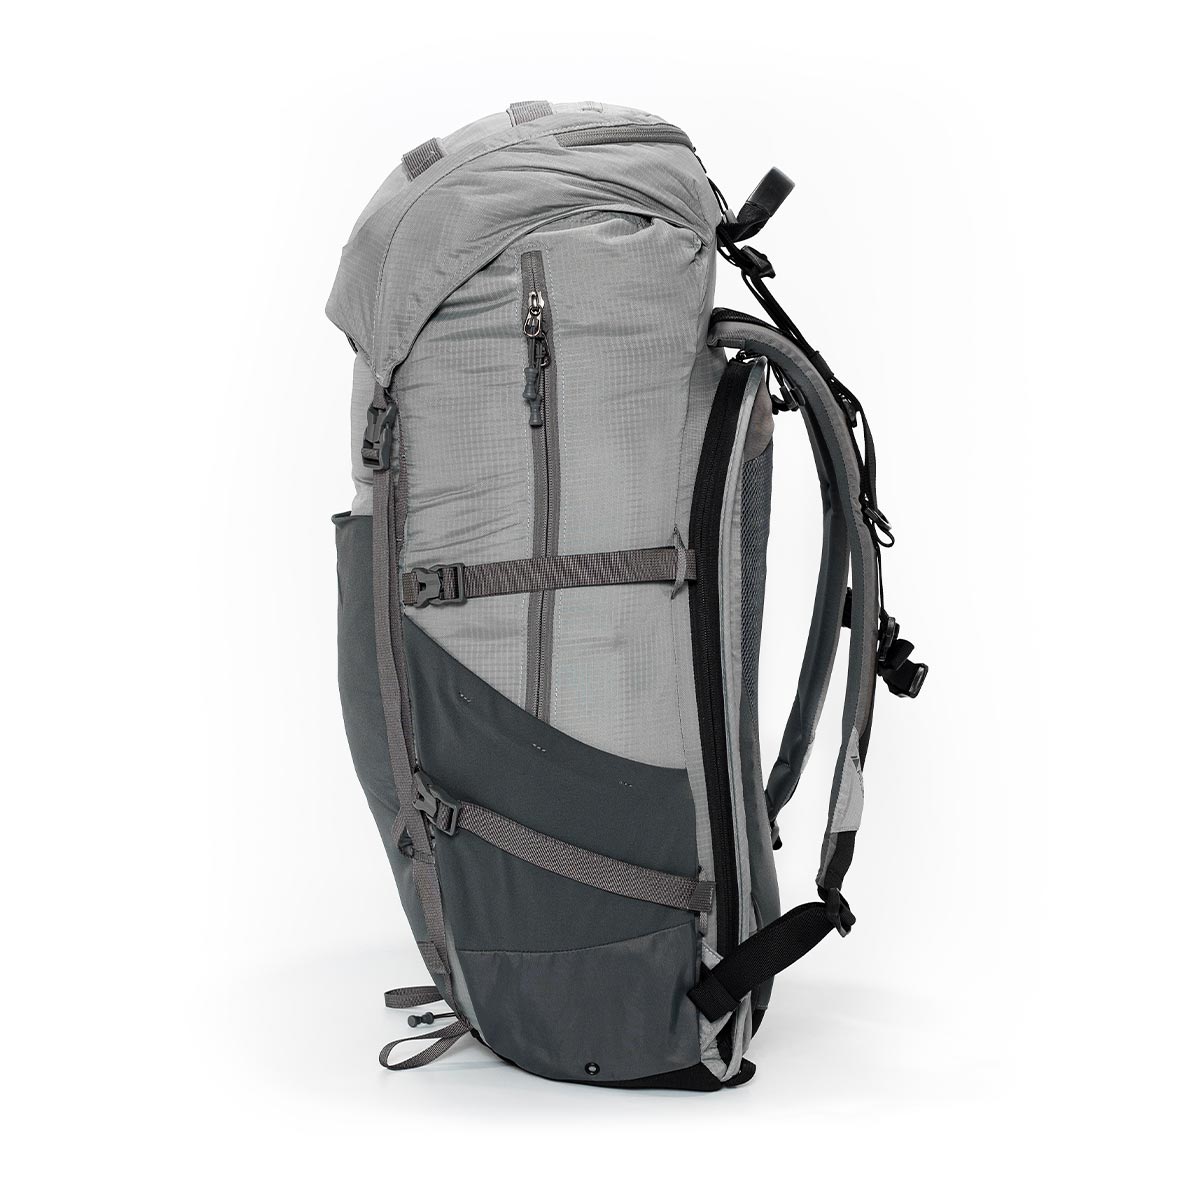 Atlas Athlete Large Backpack (Gray)